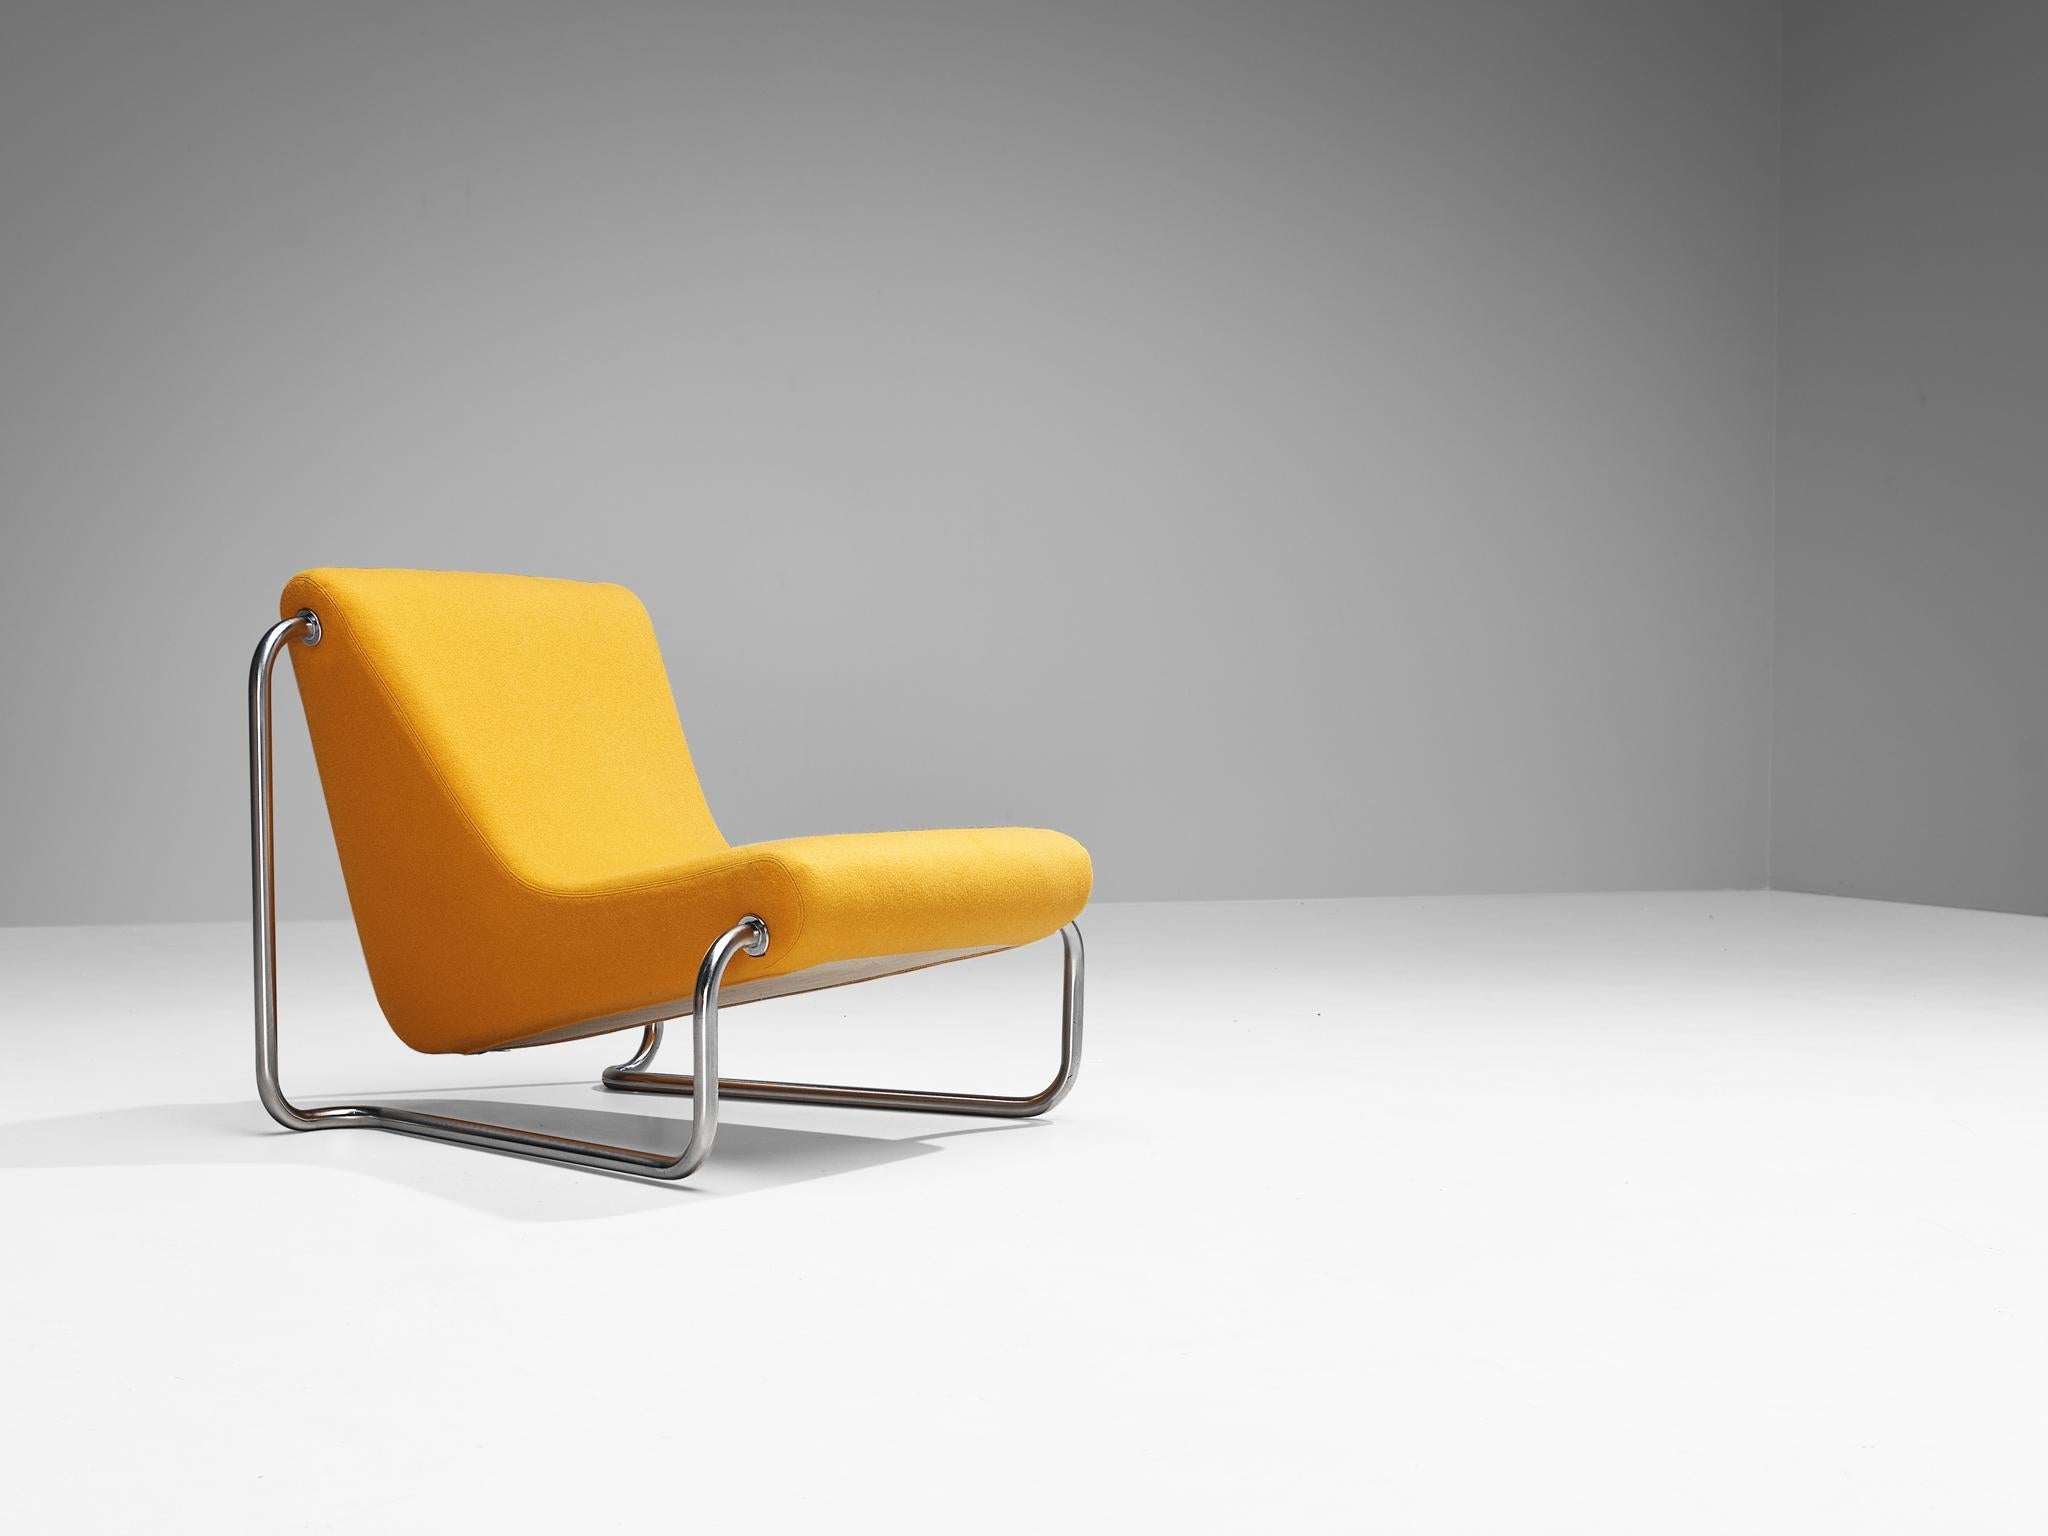 Rare Luigi Colani Pair of Lounge Chairs in Orange Upholstery